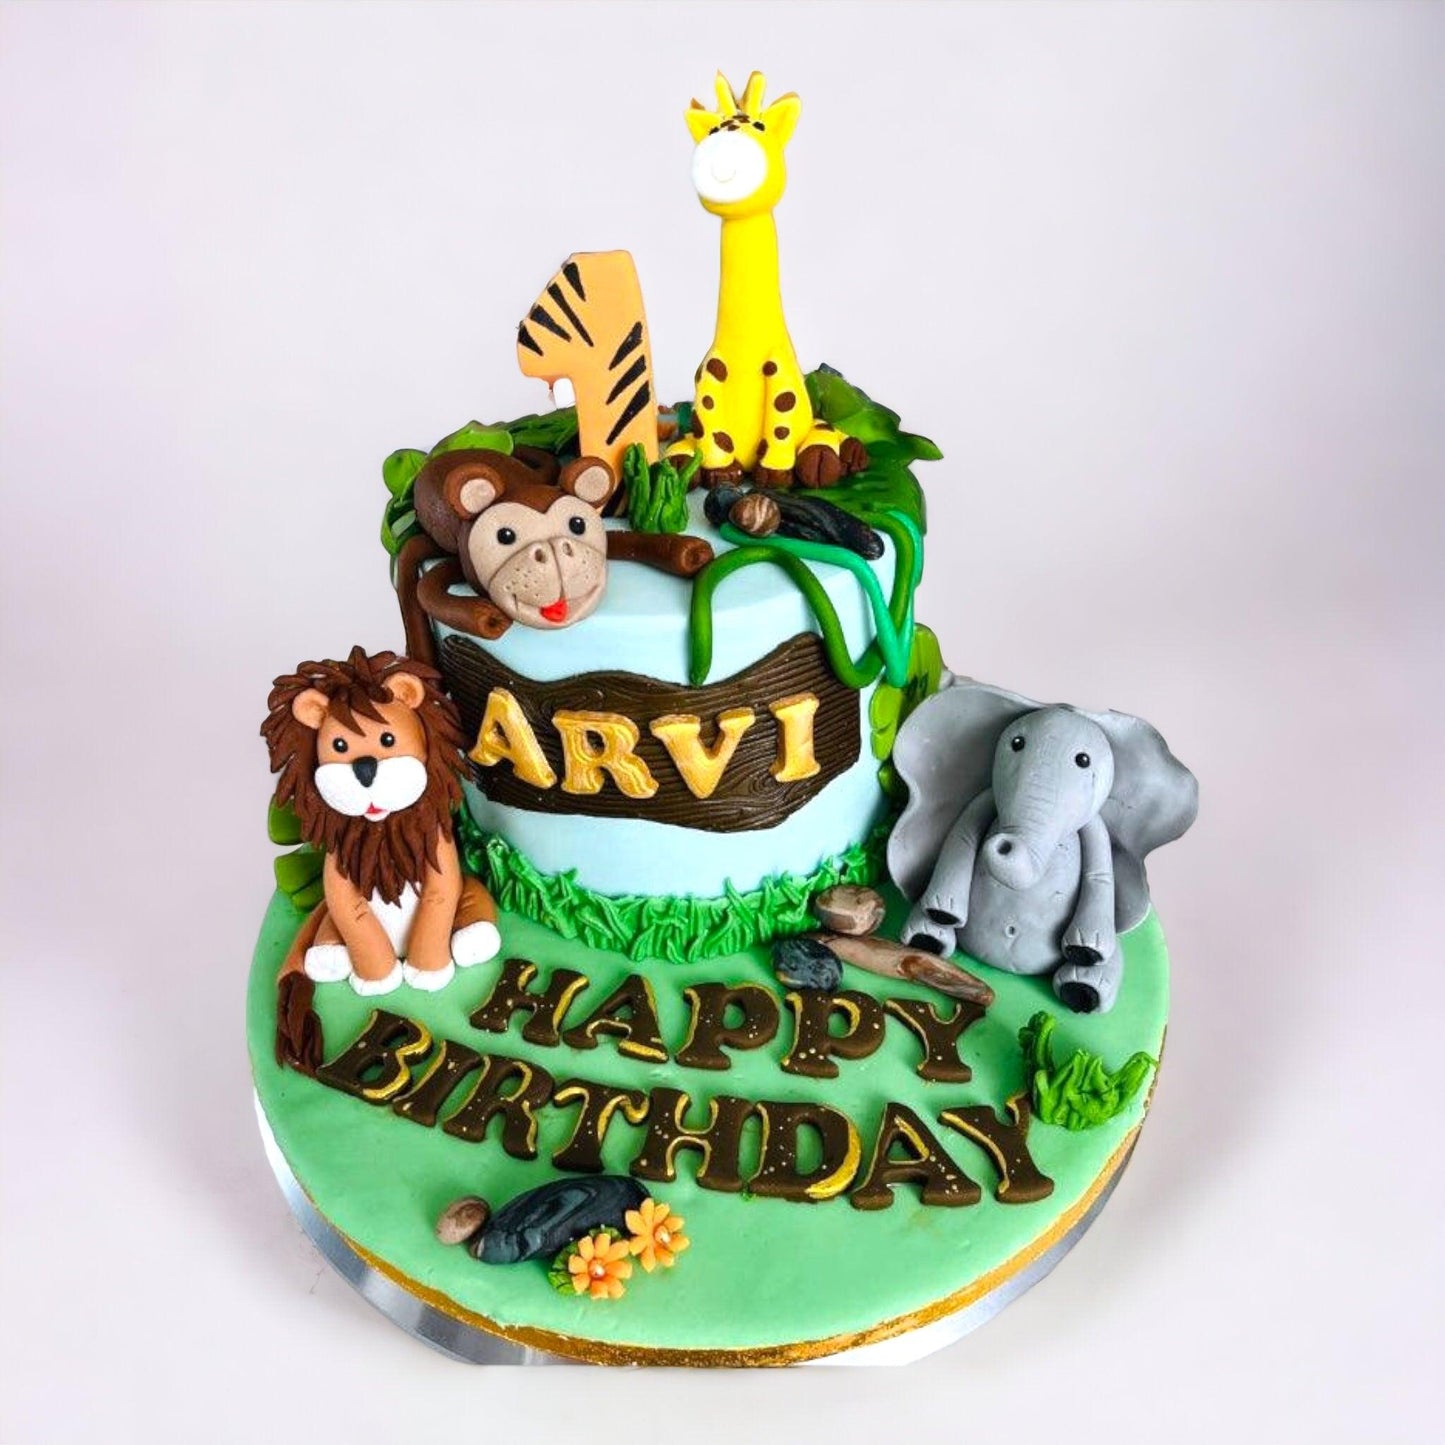 Safari birthday cake - Naturally_deliciousss